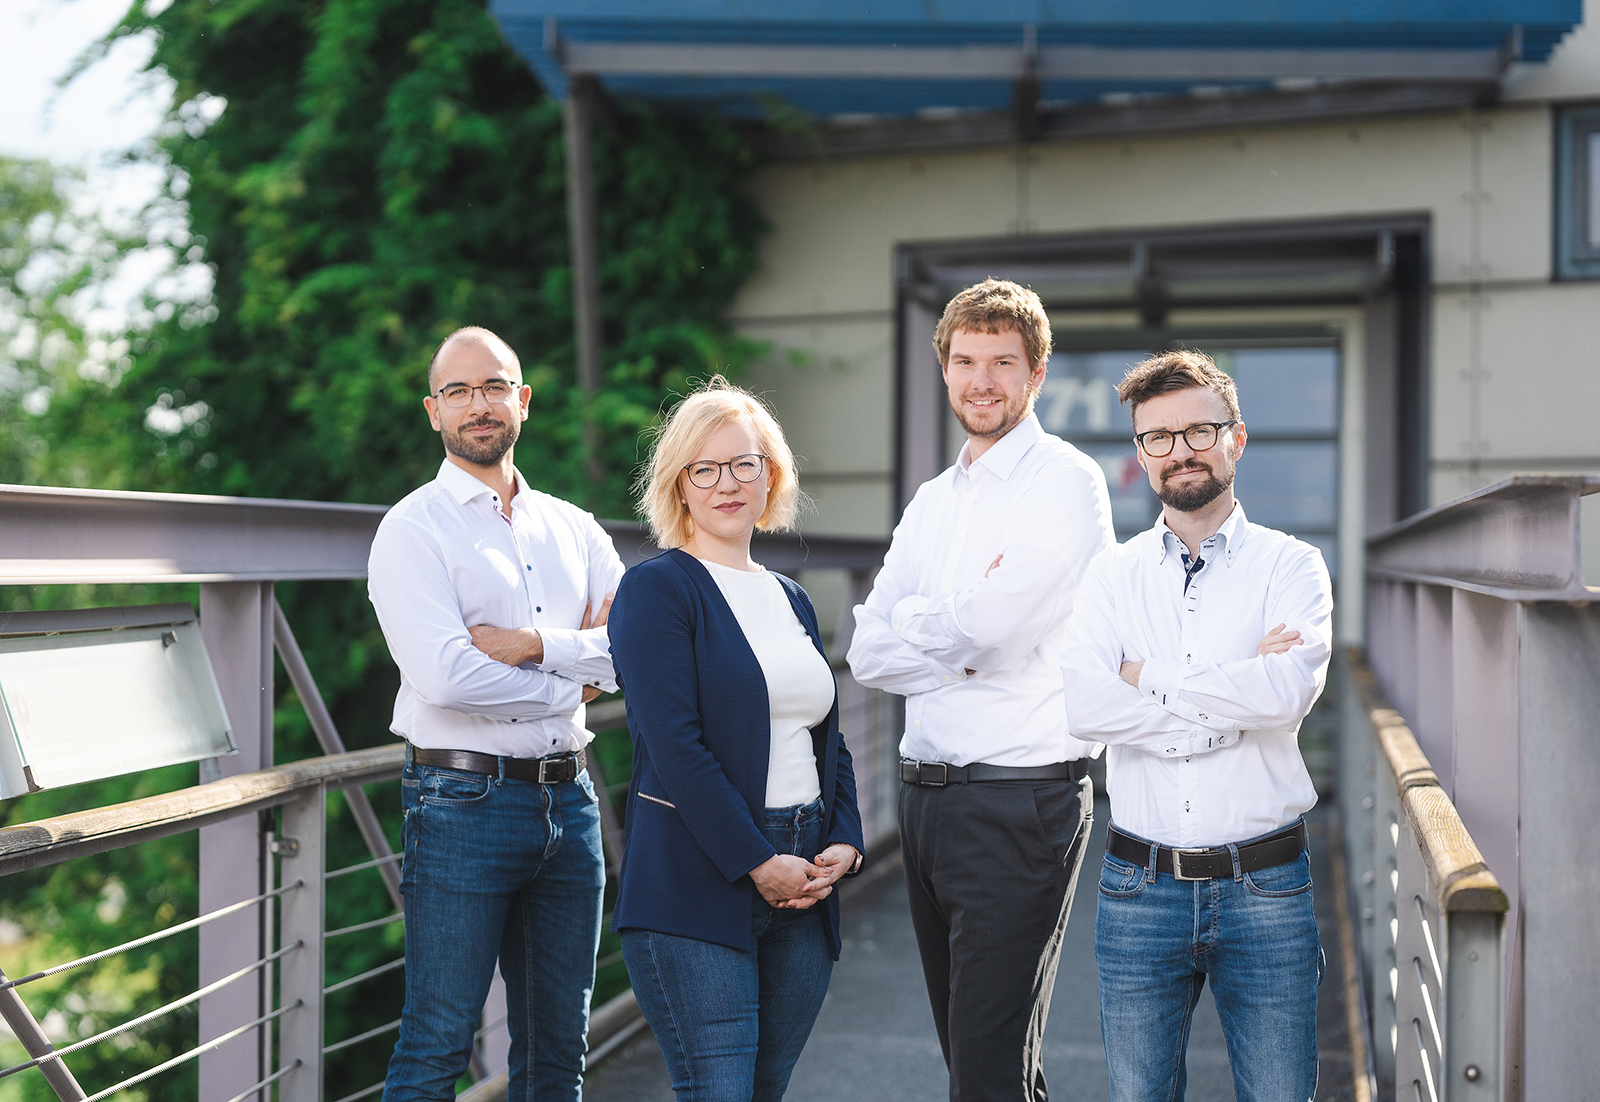 The founders of Fusion Bionic. From left to right: Sabri Alamri, Laura Kunze, Benjamin Krupop, Tim Kunze.